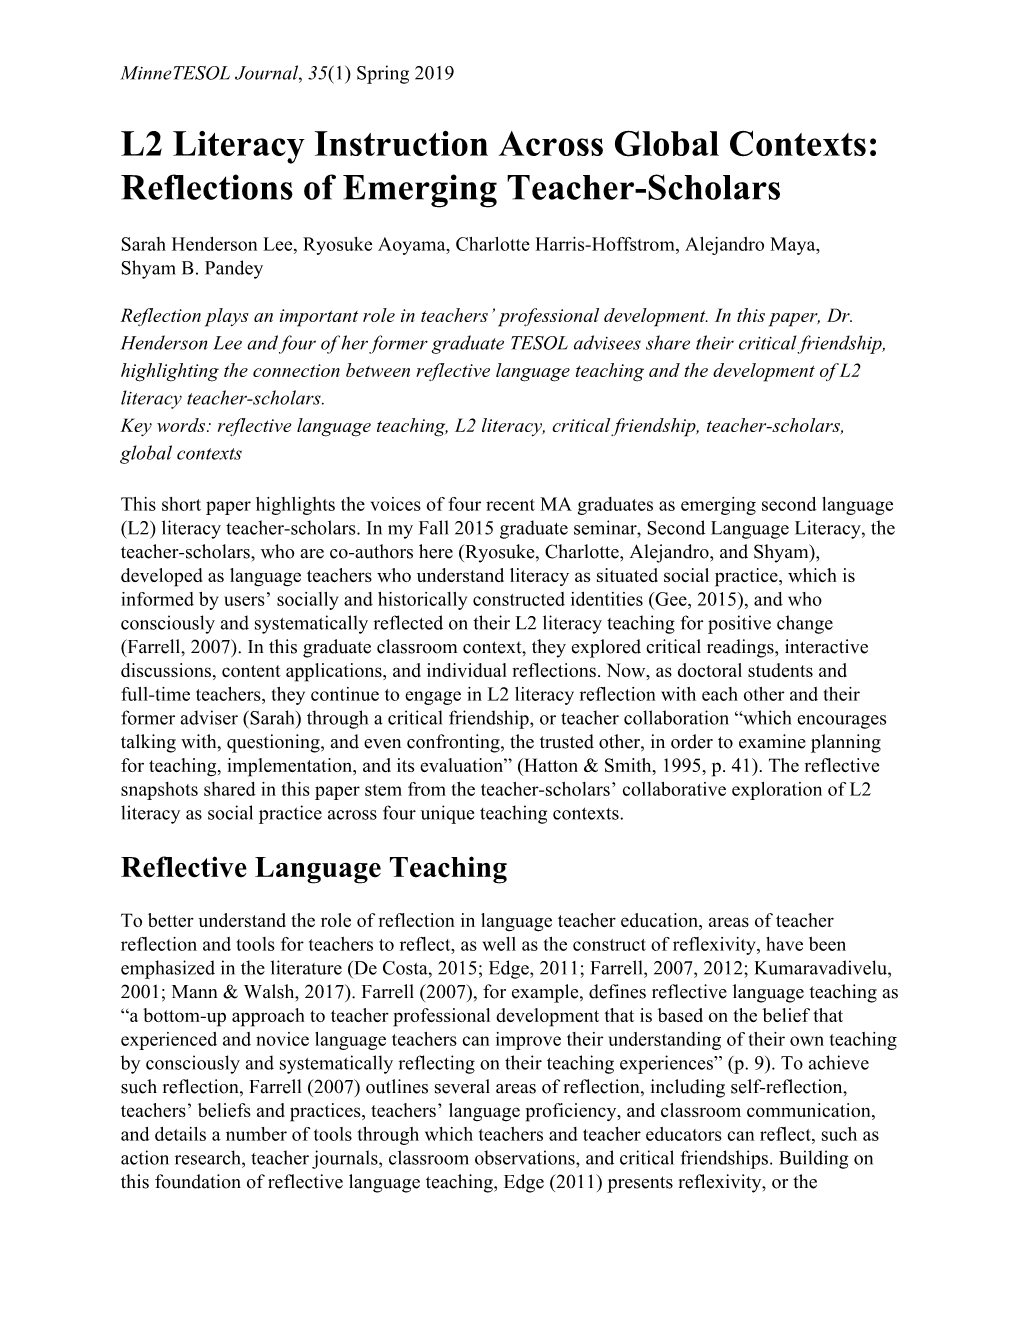 L2 Literacy Instruction Across Global Contexts: Reflections of Emerging Teacher-Scholars